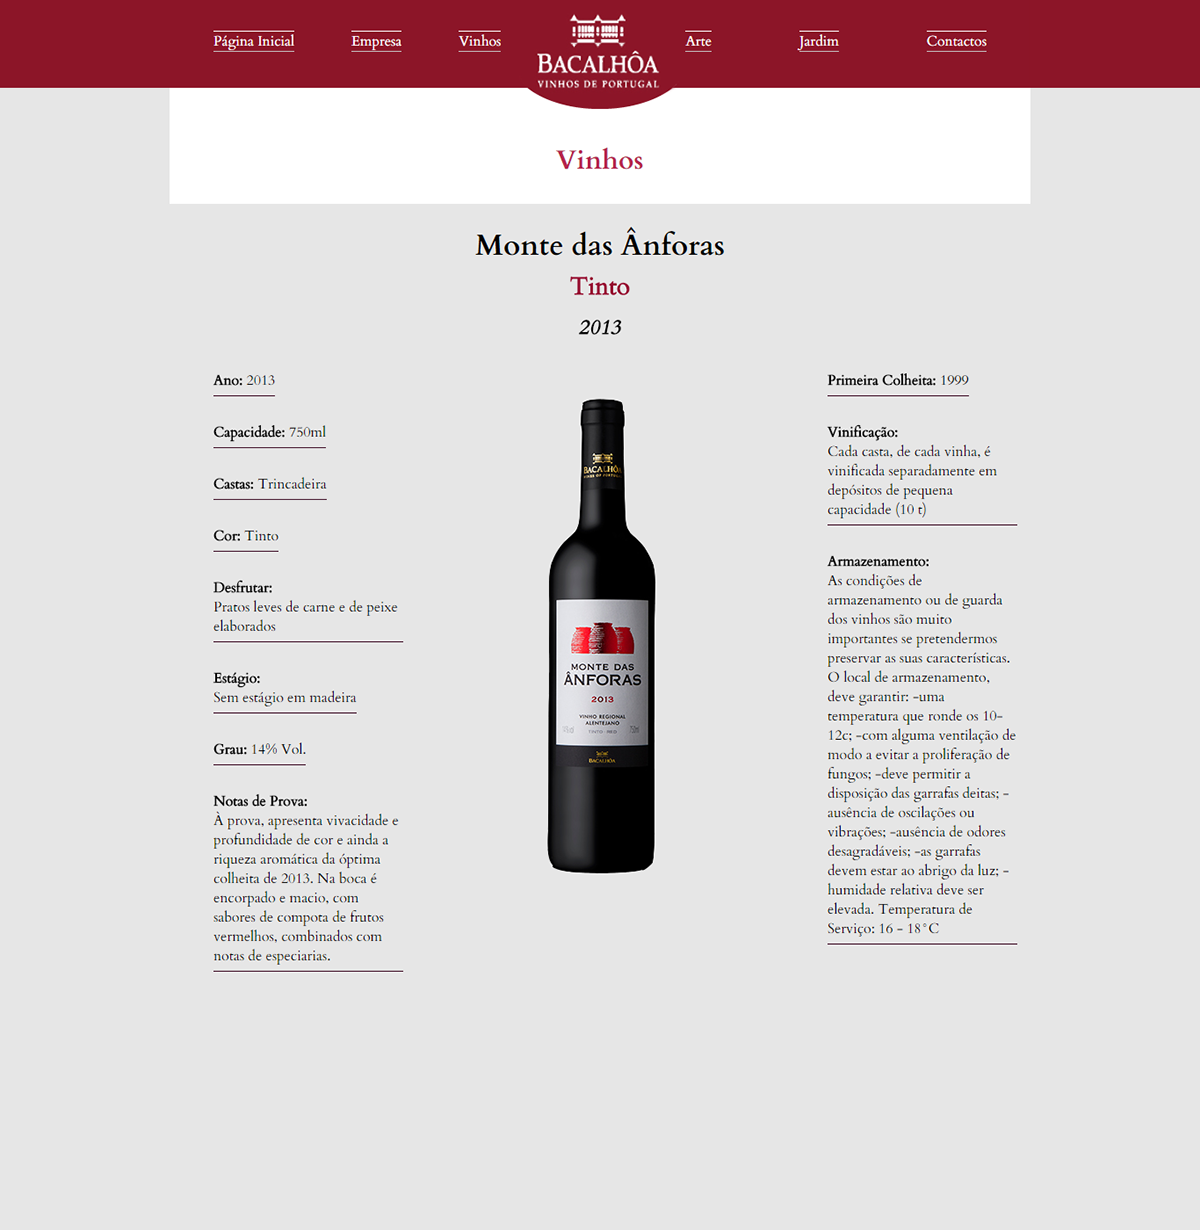 Bacalhôa Wines Website